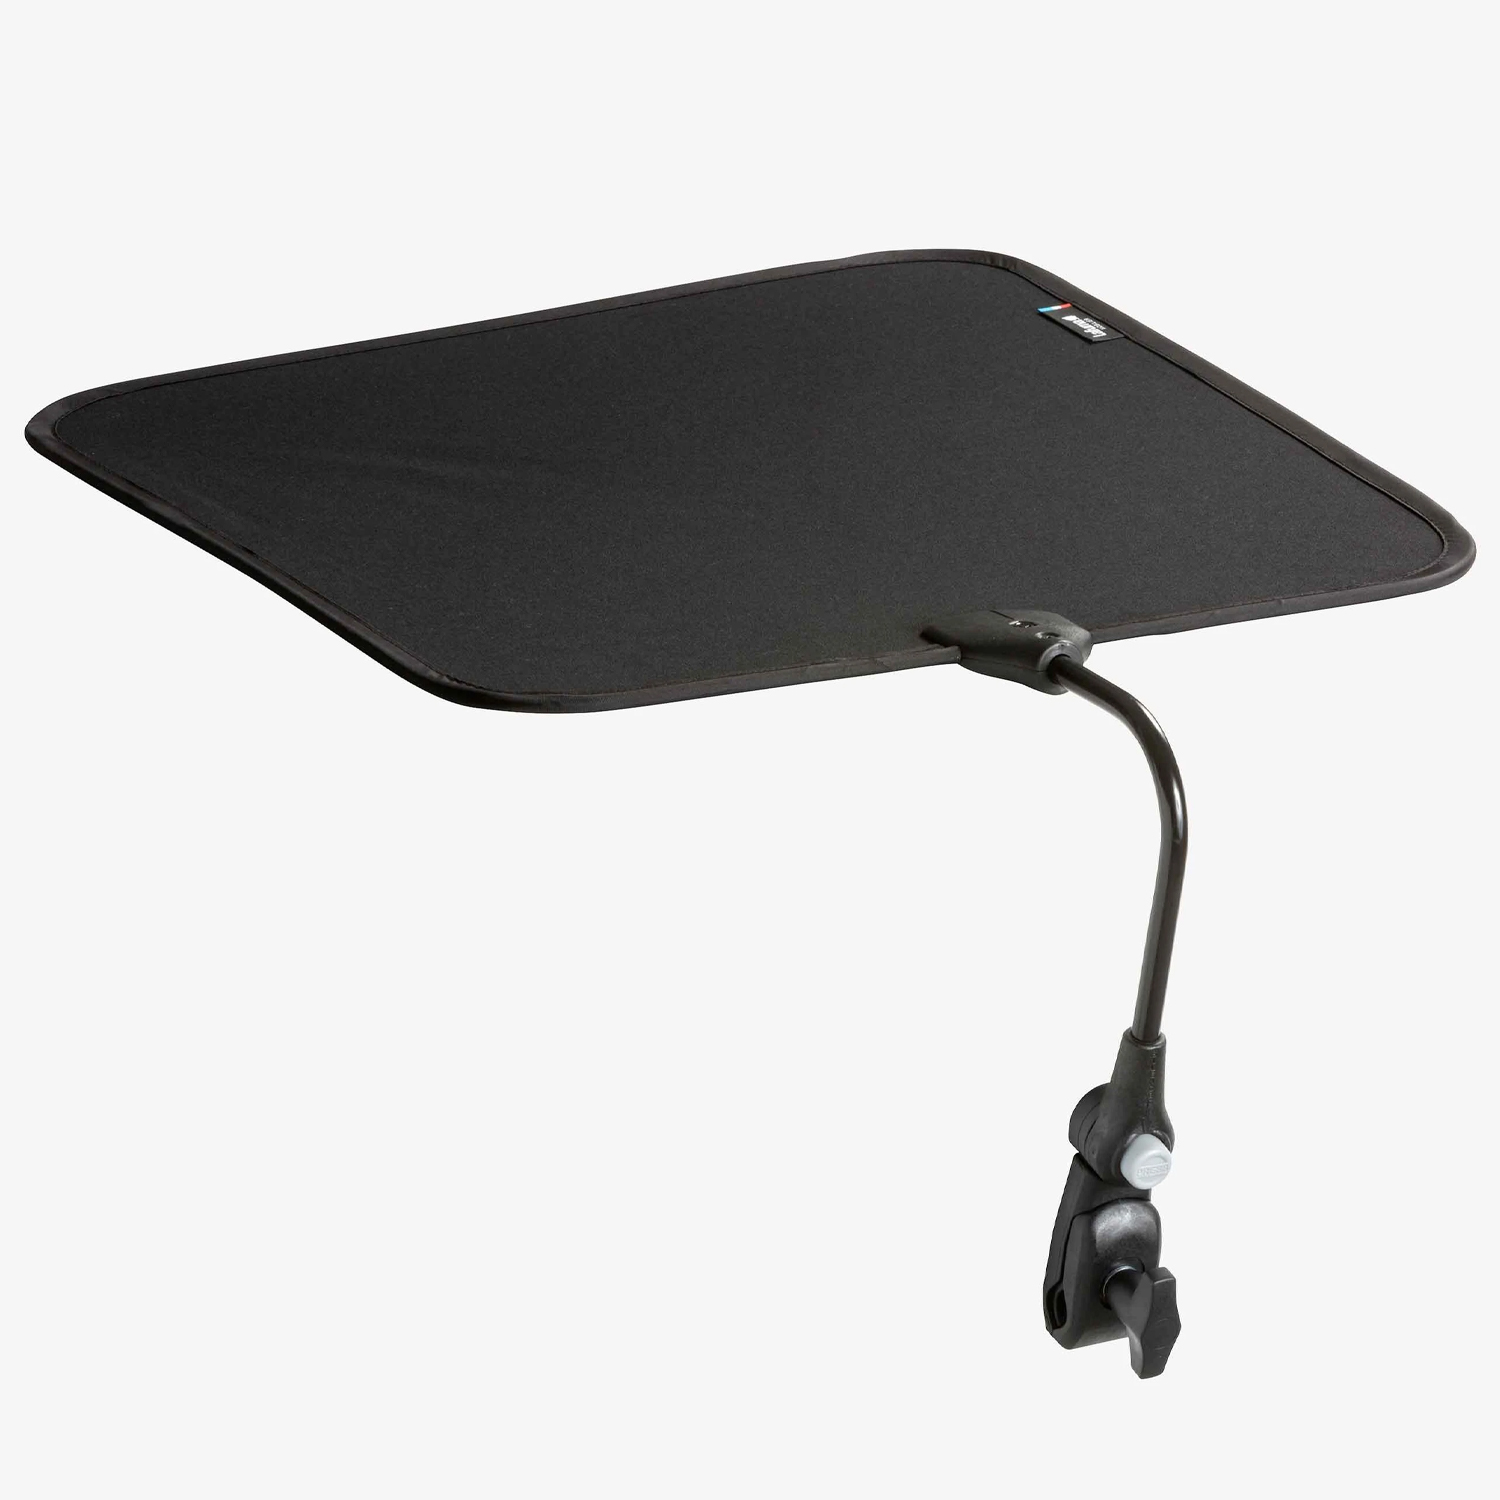 Lafuma Outdoor Zero Gravity Camping Chair Sun Shade Attachment Accessory, Noir - image 1 of 5